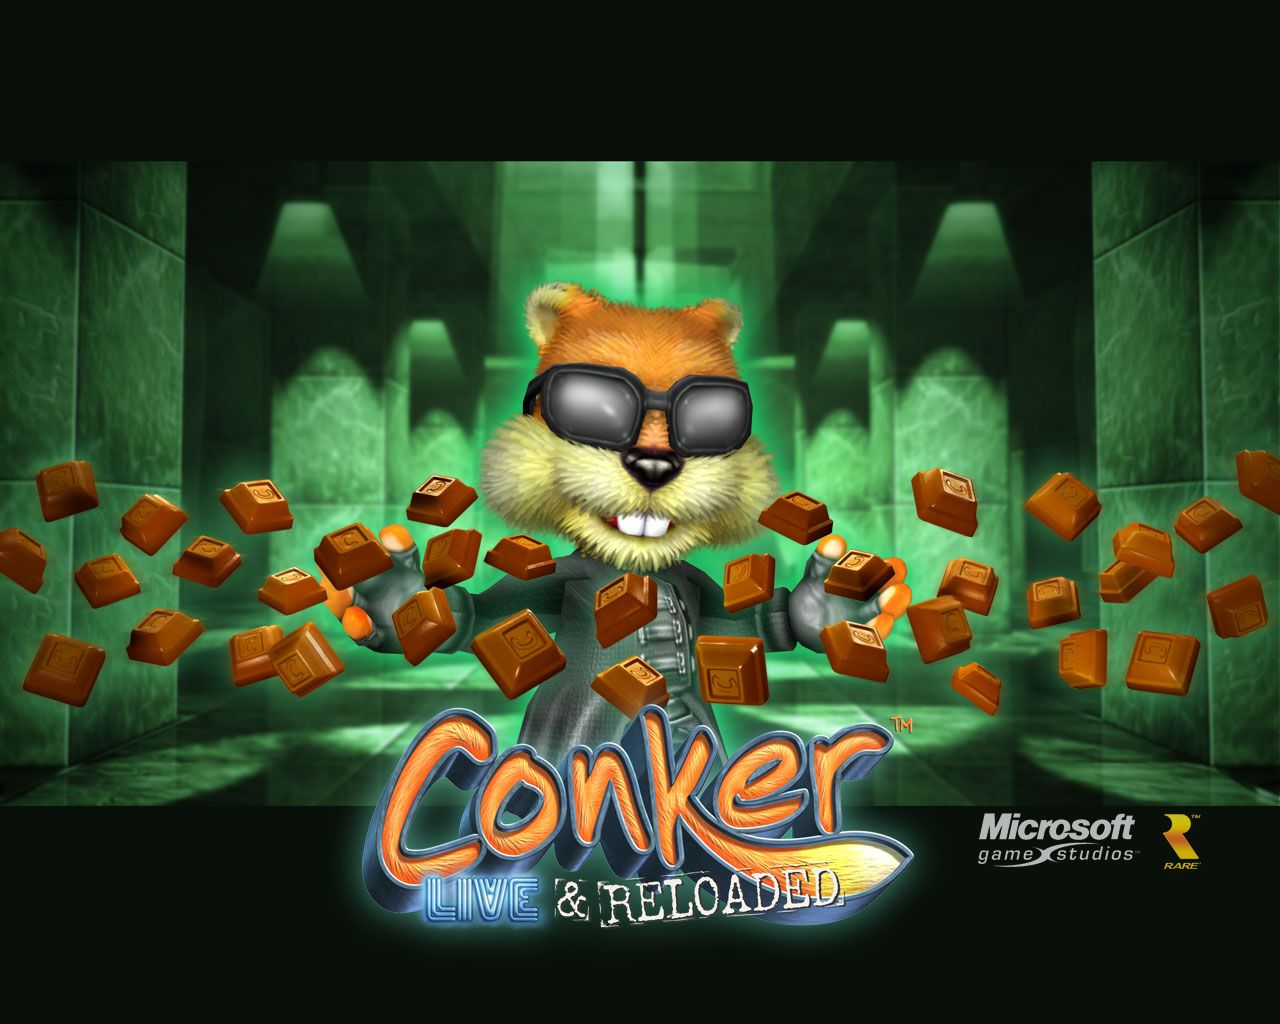 Conker: Live & Reloaded (2005) promotional art